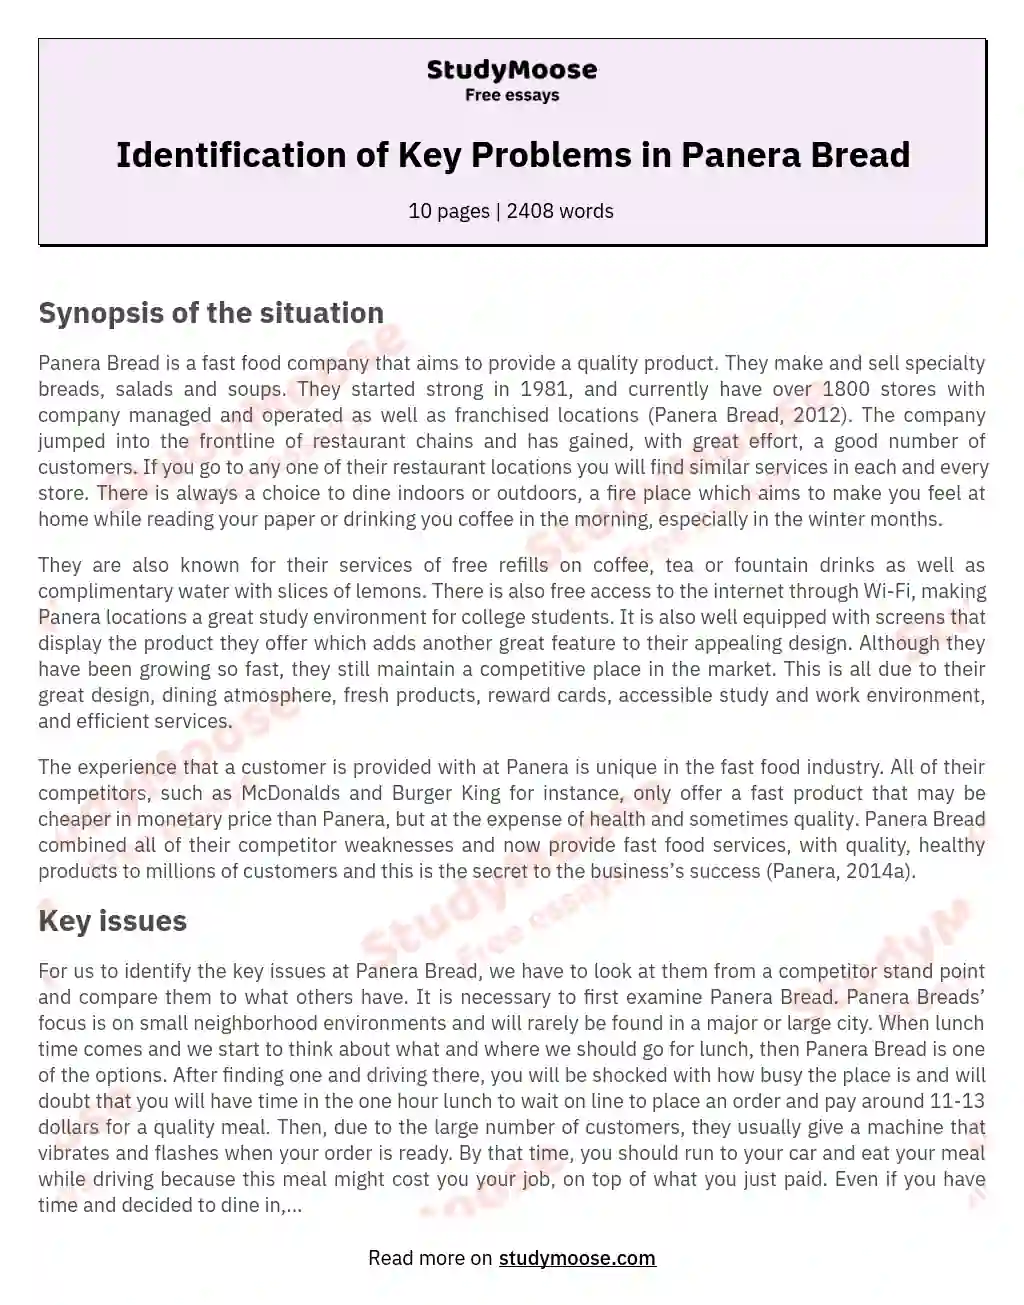 Identification of Key Problems in Panera Bread essay